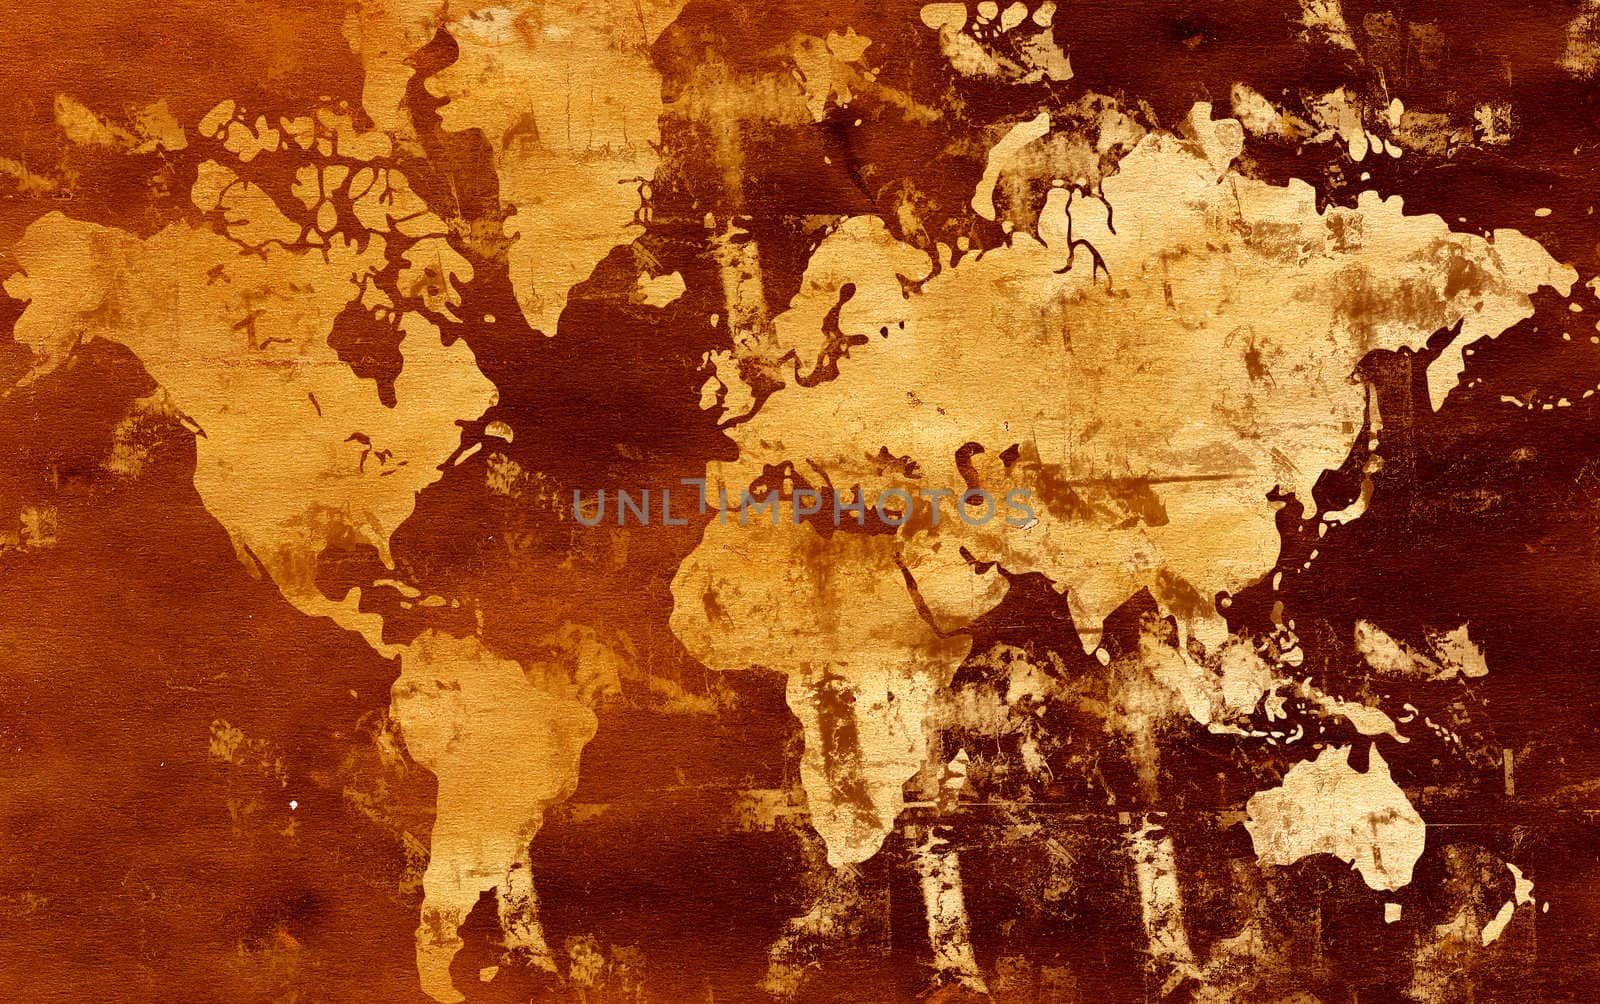 Computer designed highly detailed grunge world map illustration